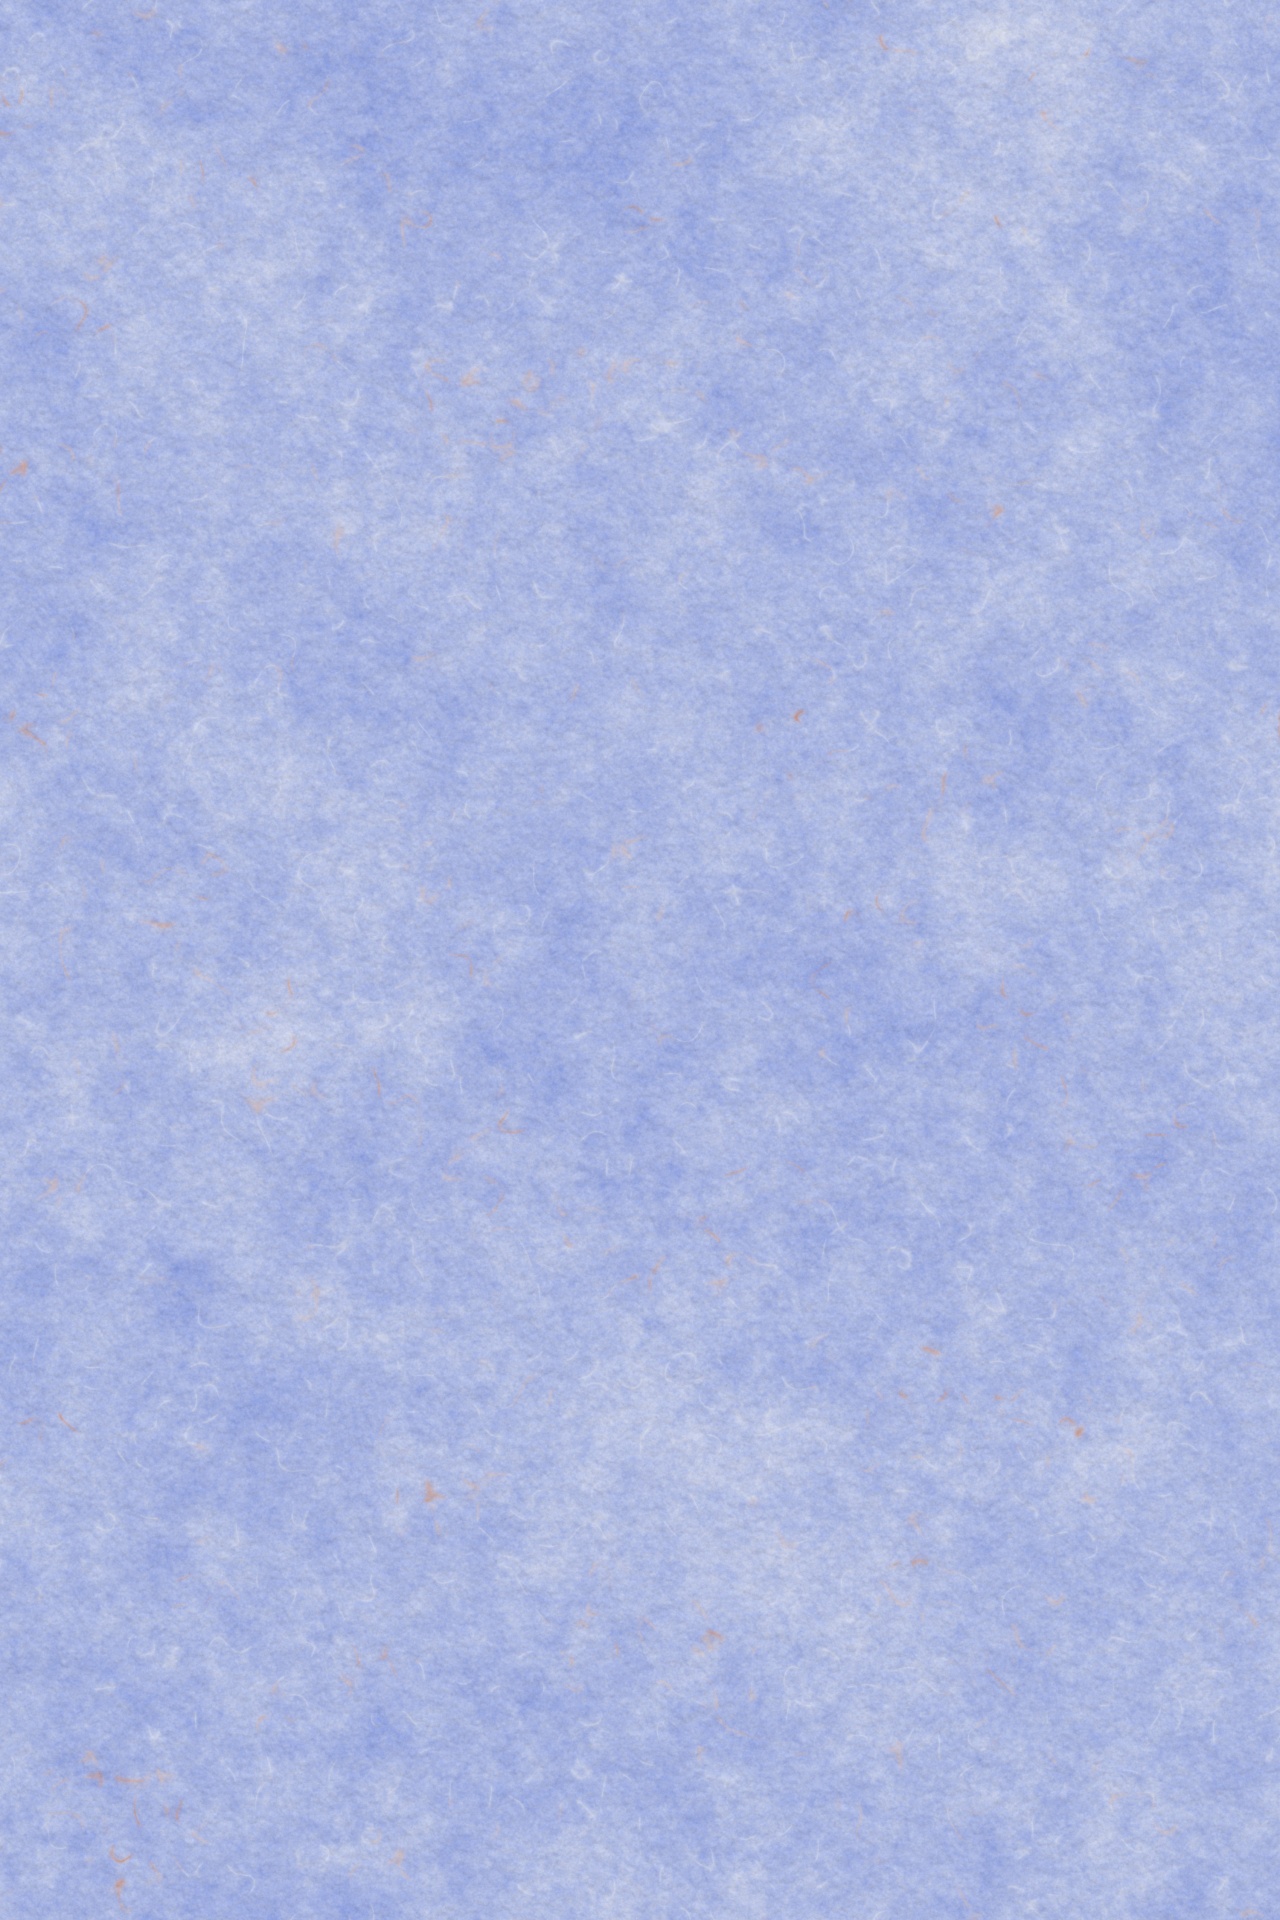 Paper Texture Background Blue